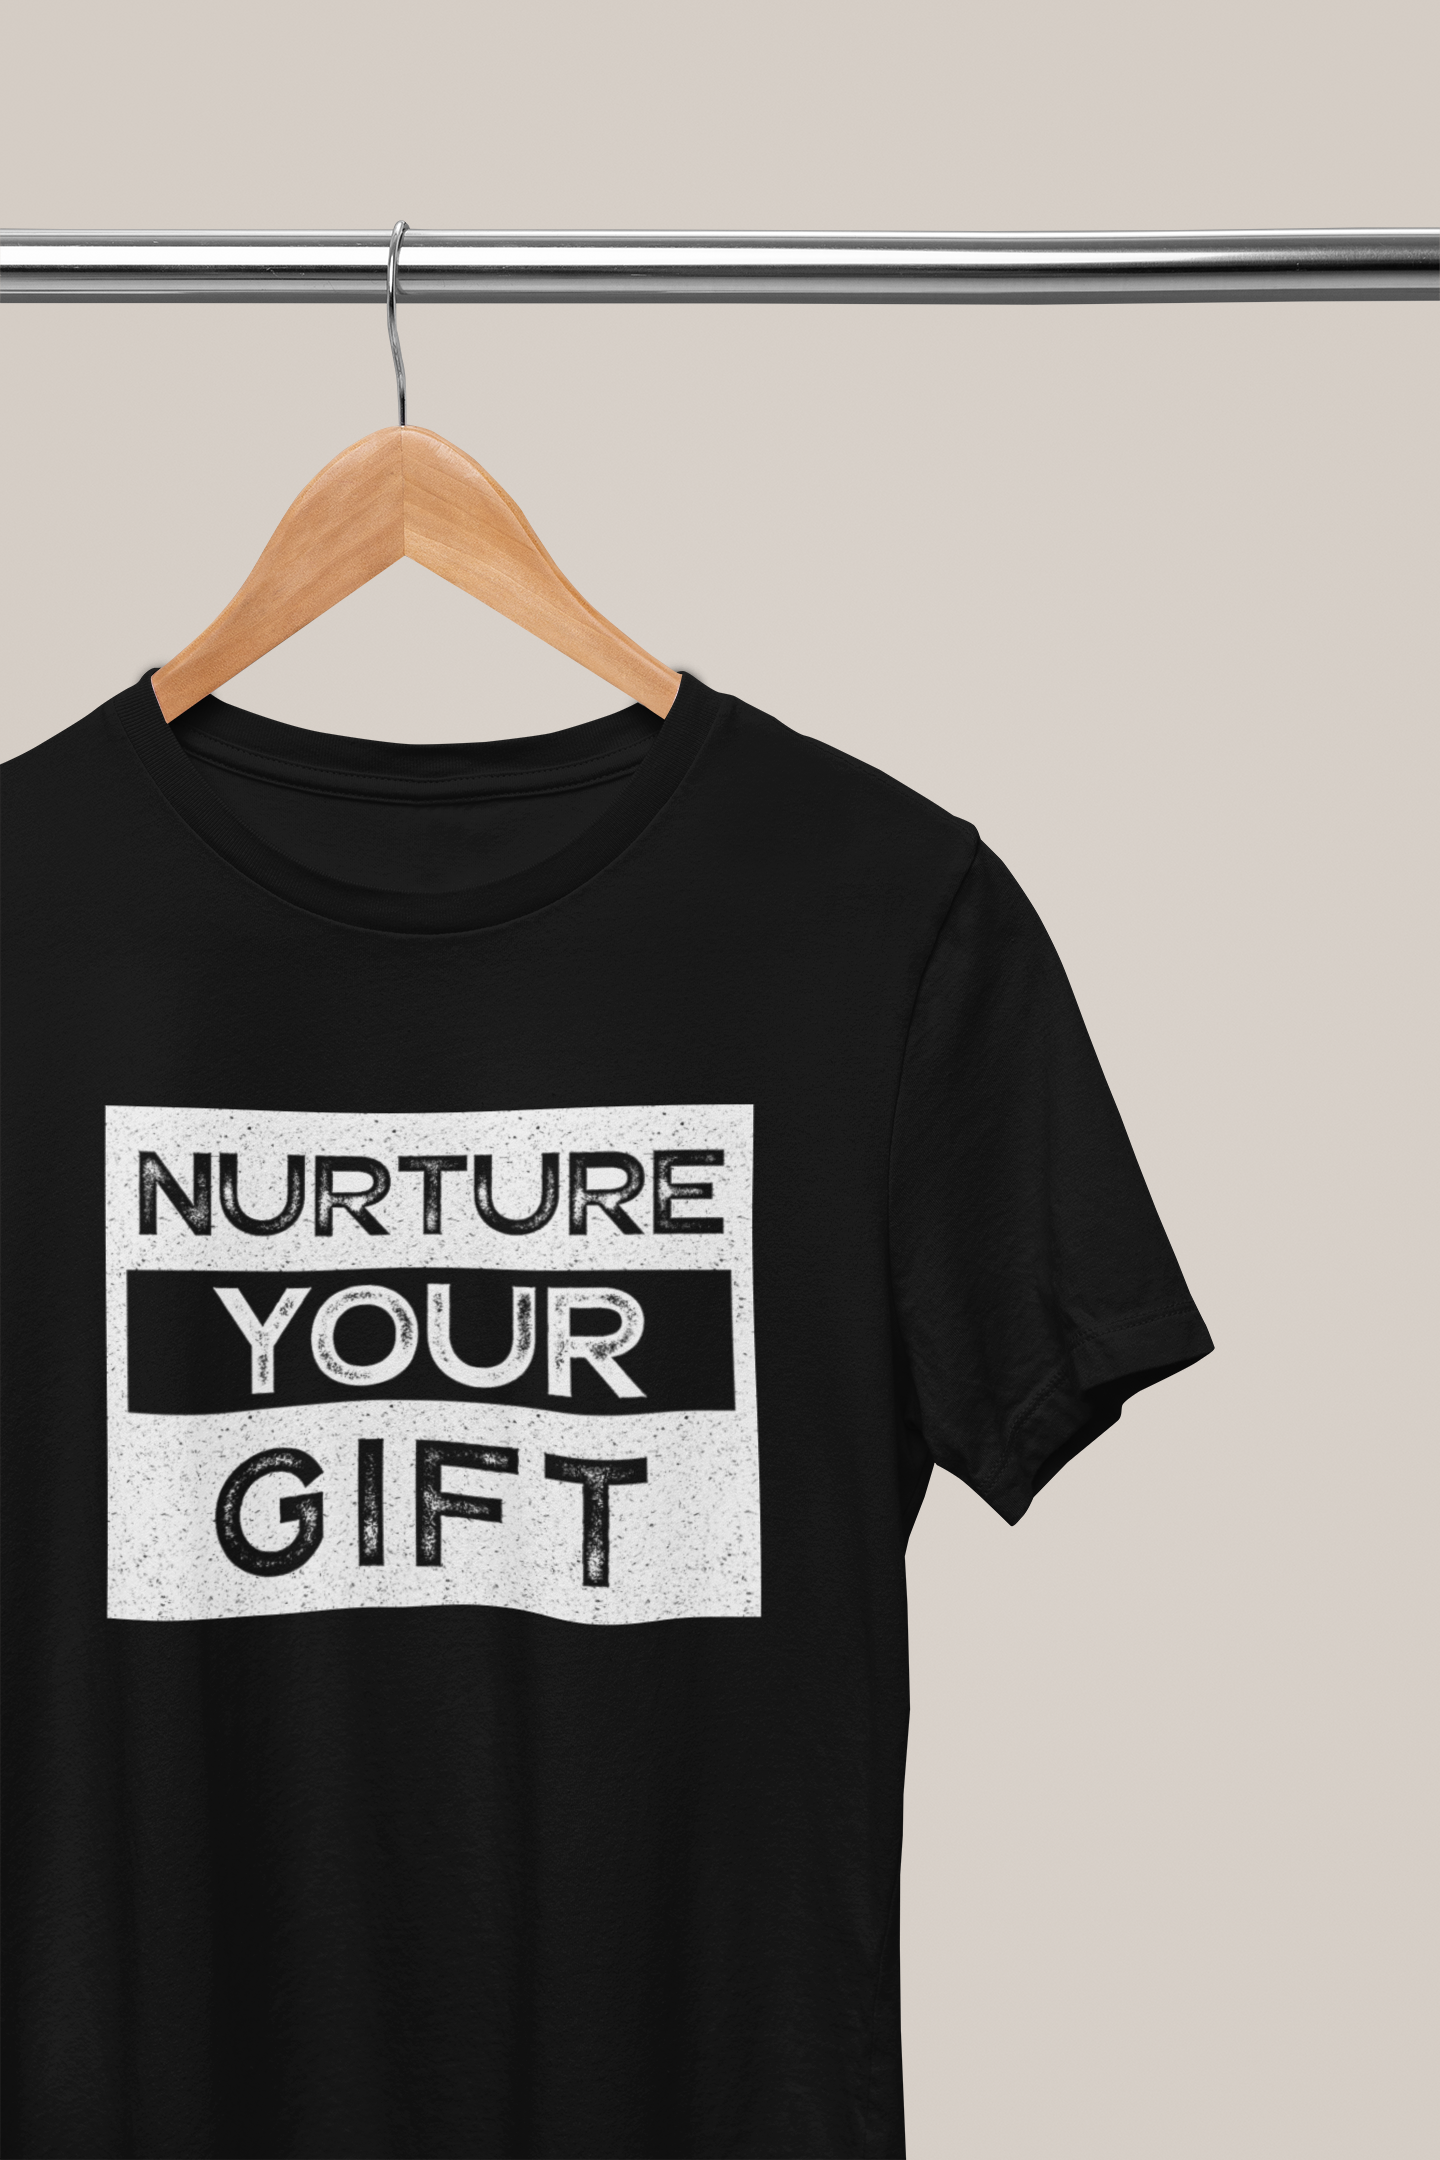 Nurture Your Gift, Hoodies, Sweatshirts, Tees, and Mugs